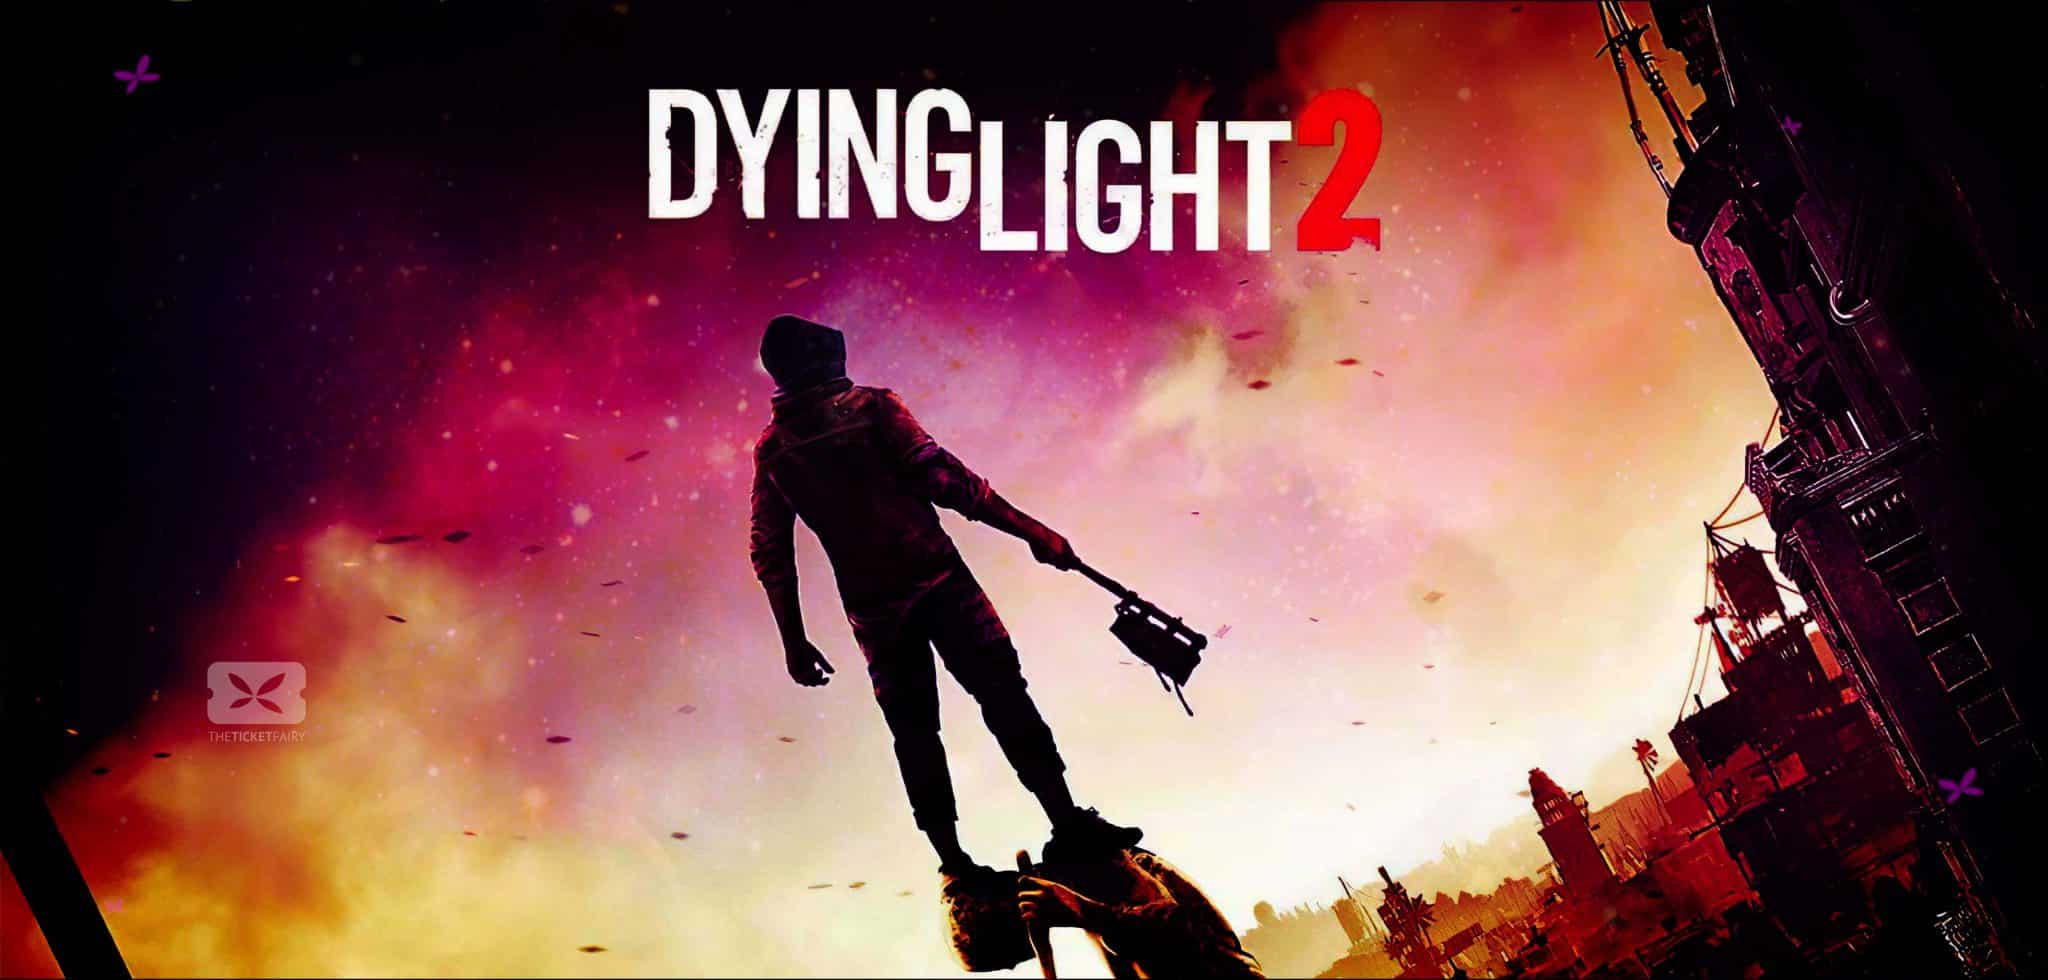 Dying Light Review - GameSpot